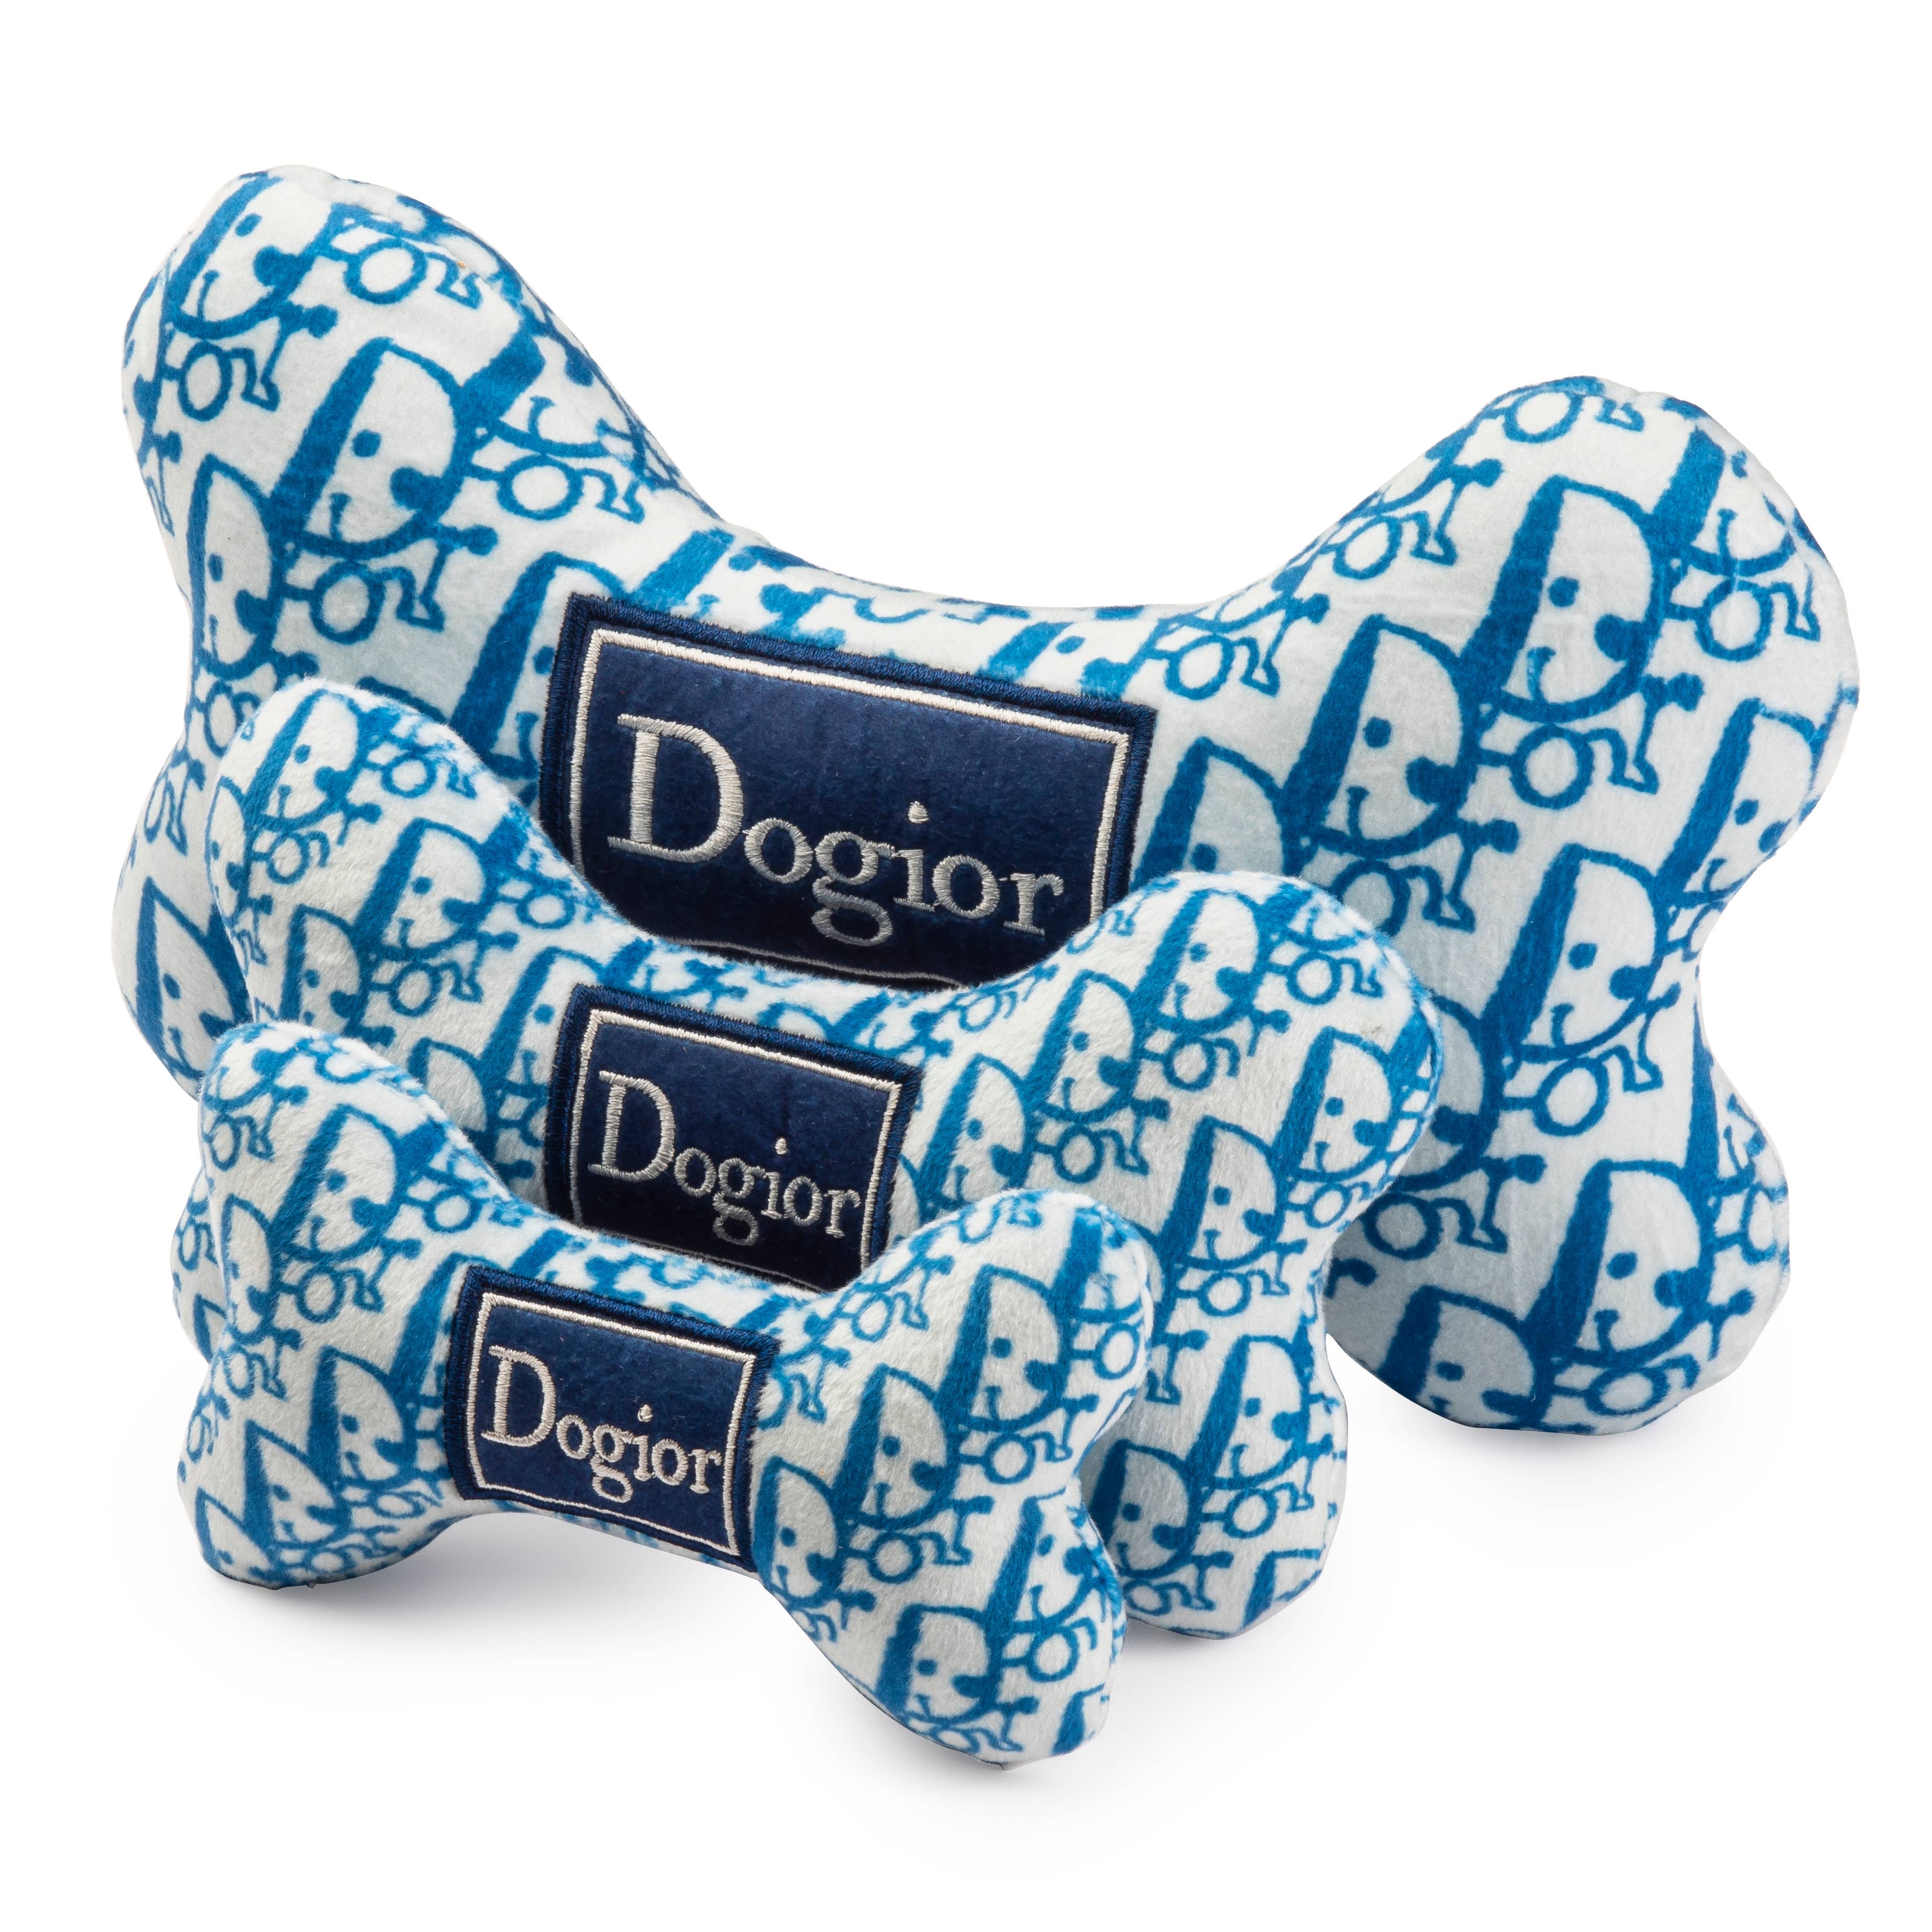 Dogior Bones Dog Toy